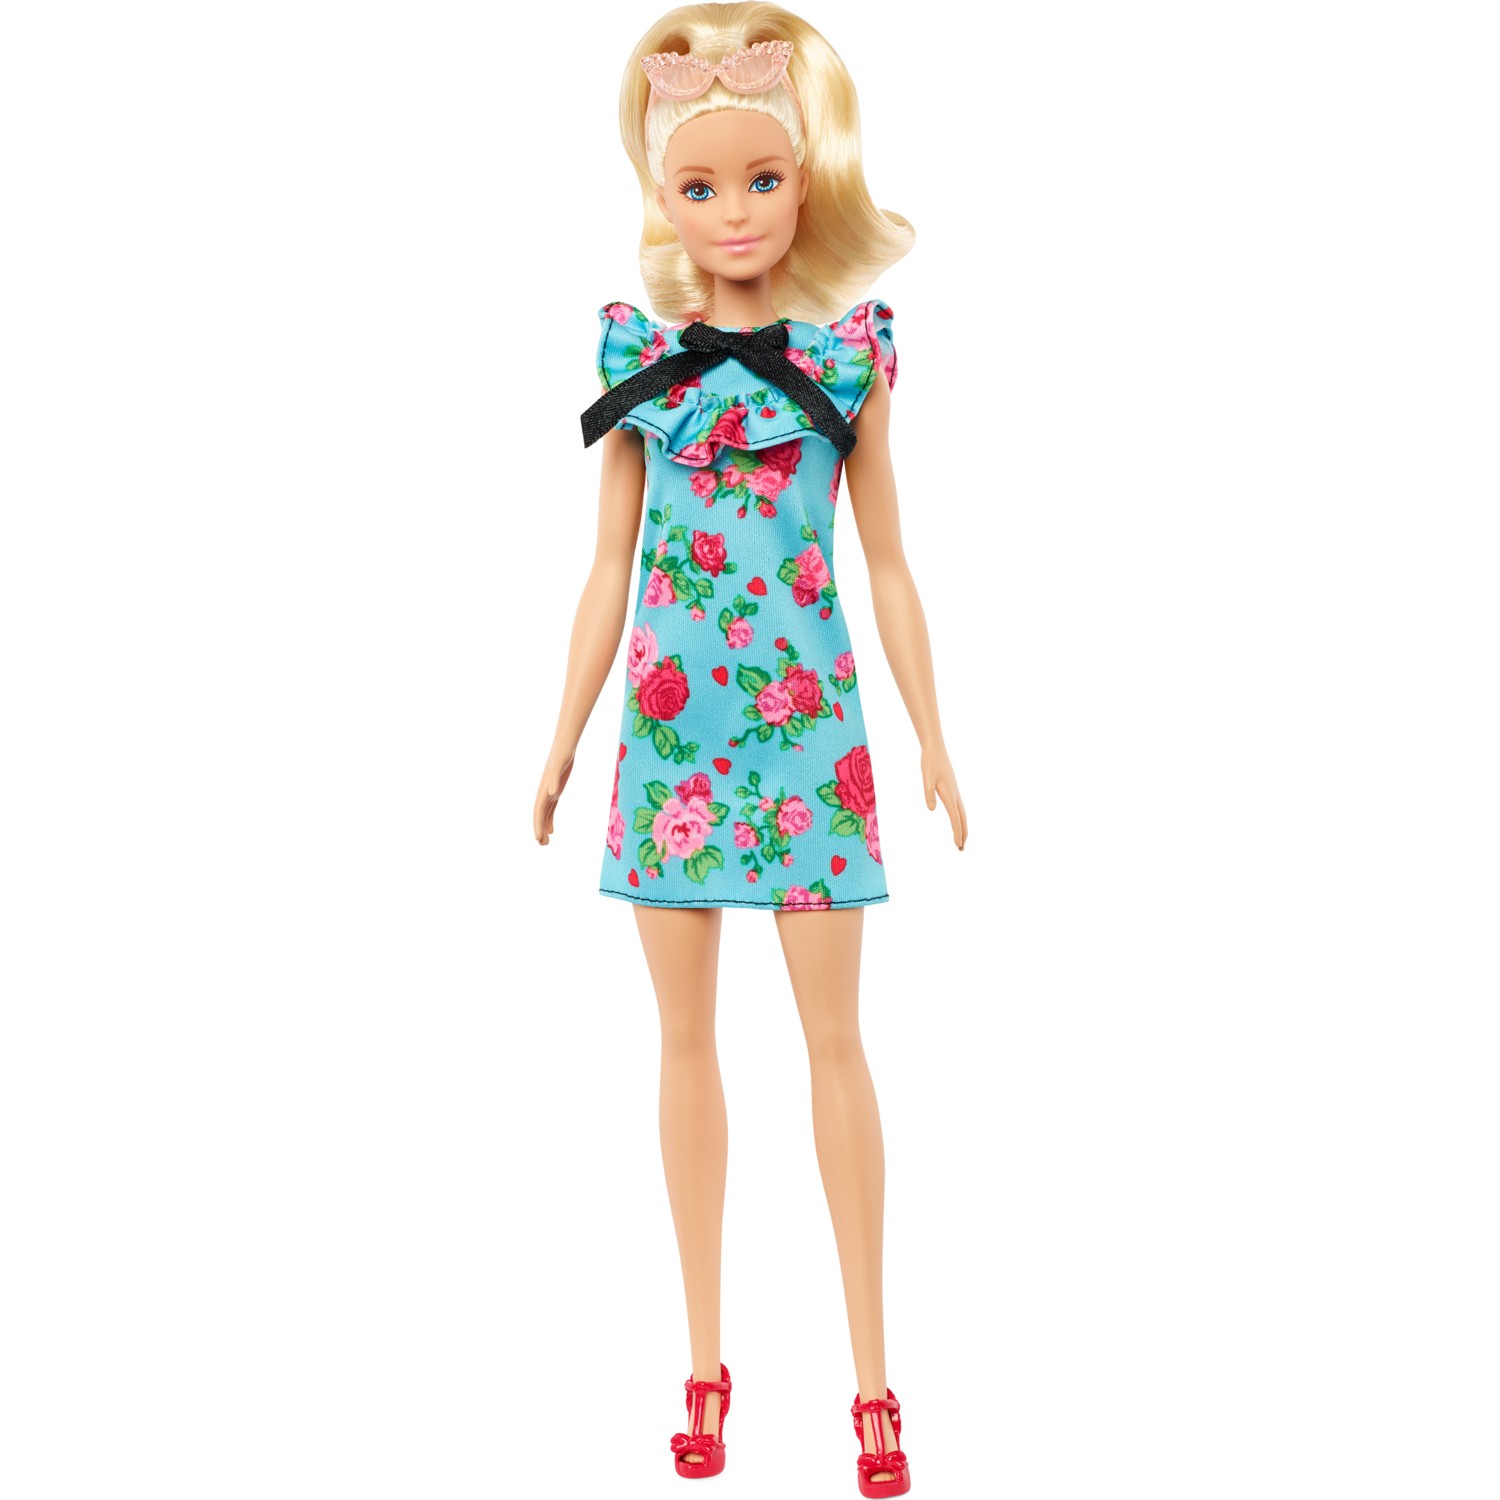 Кукла Barbie Fashionistas модное платье для куклы 1 6 bjd одежда для куклы барби наряды для куклы барби одежда цветочное платье аксессуары для кукольного домика 11 5 дю